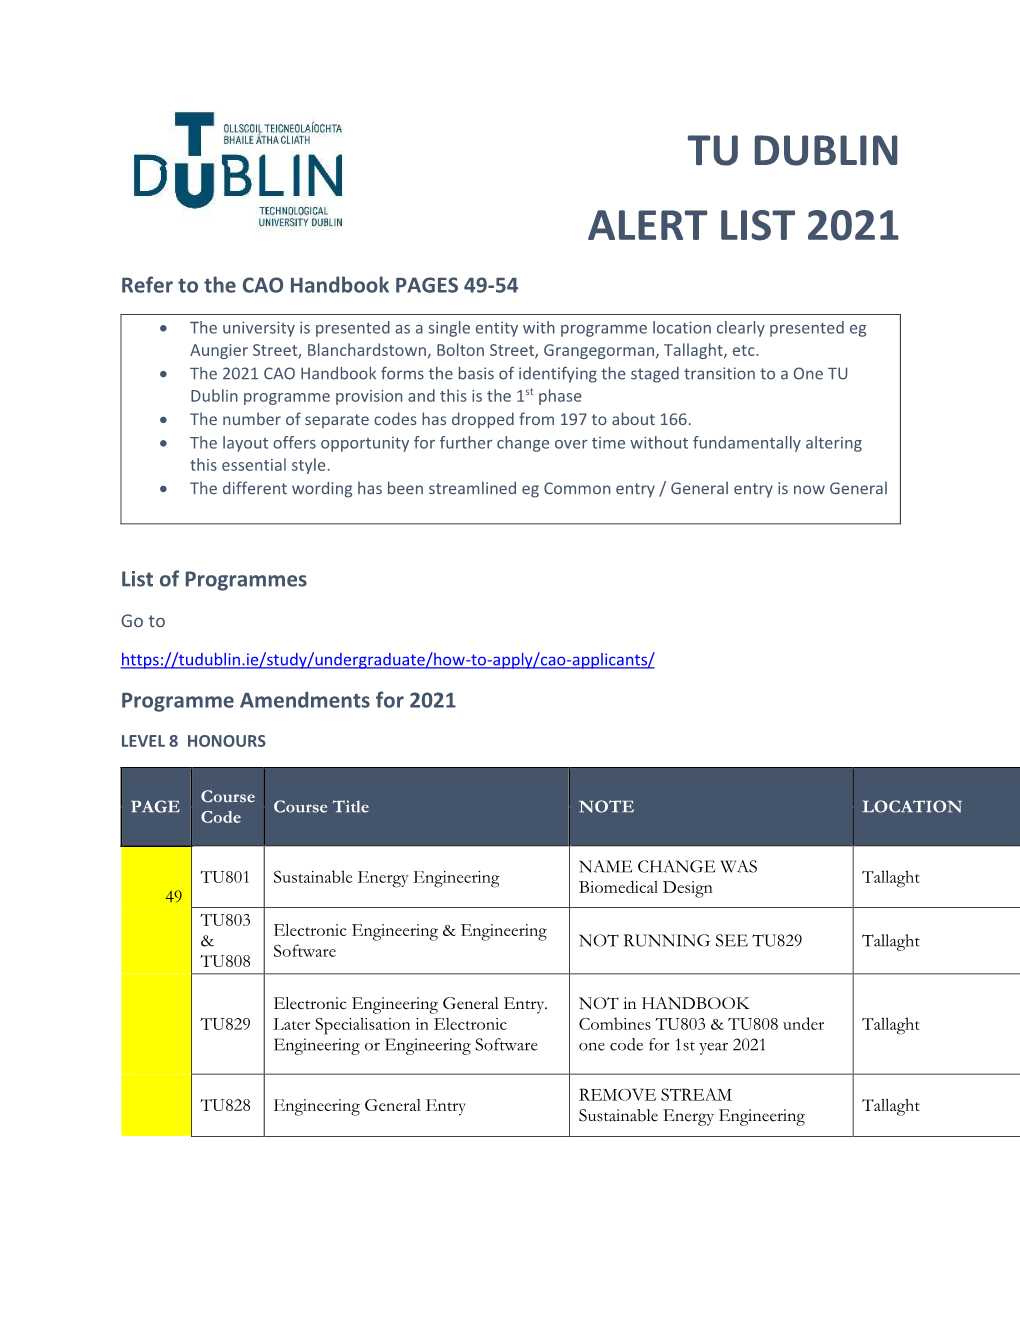 Tu Dublin Alert List 2021